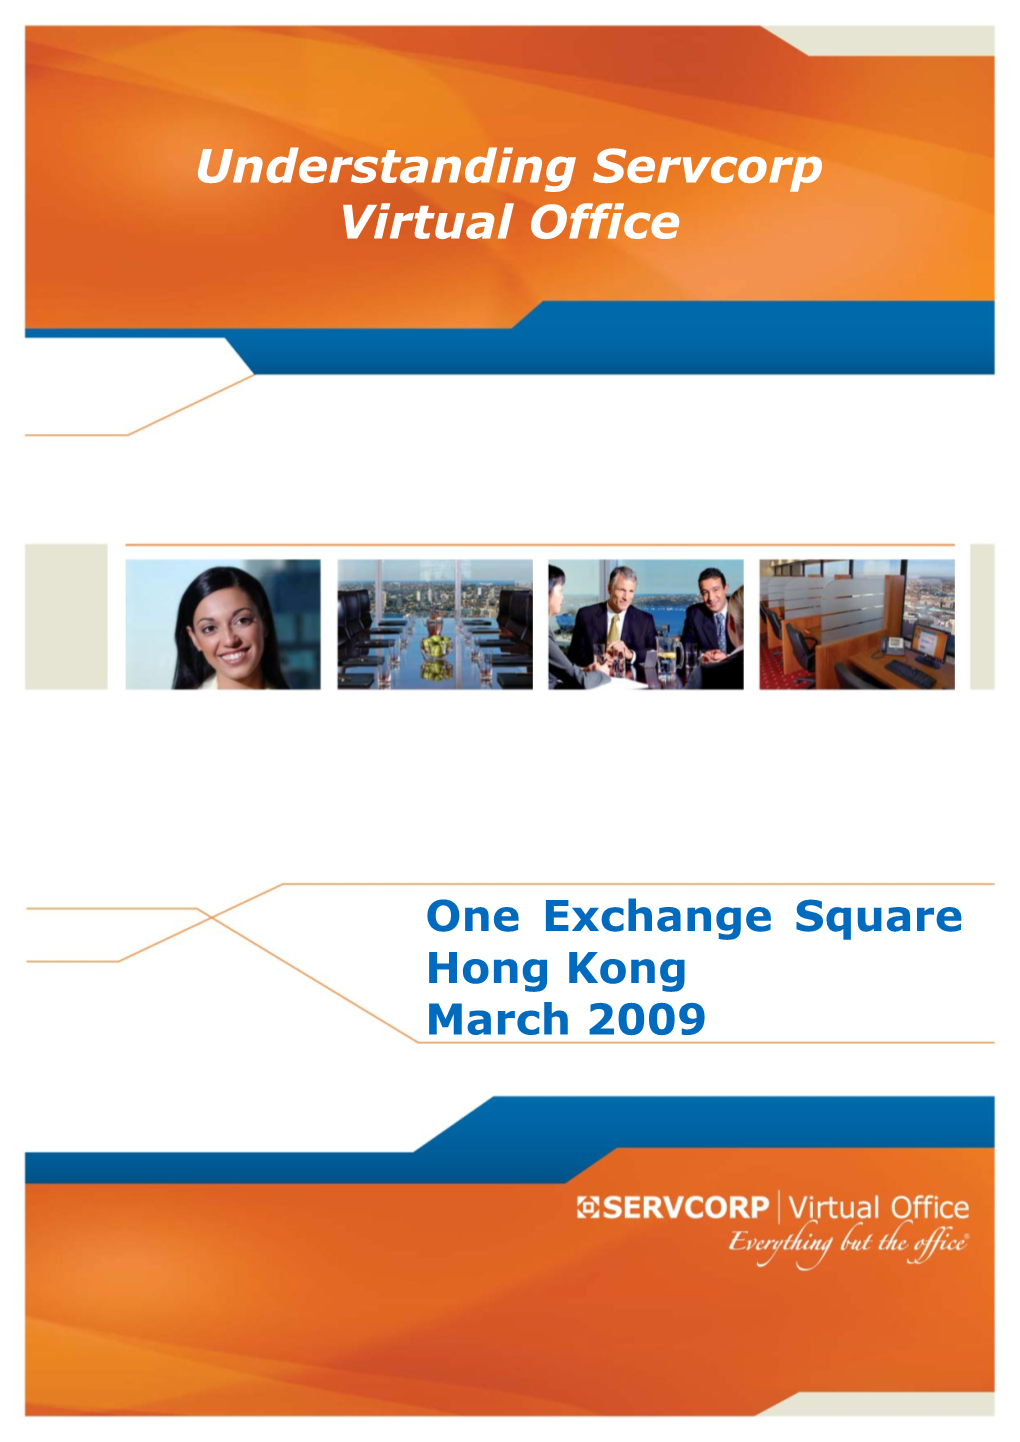 Understanding Servcorp Virtual Office